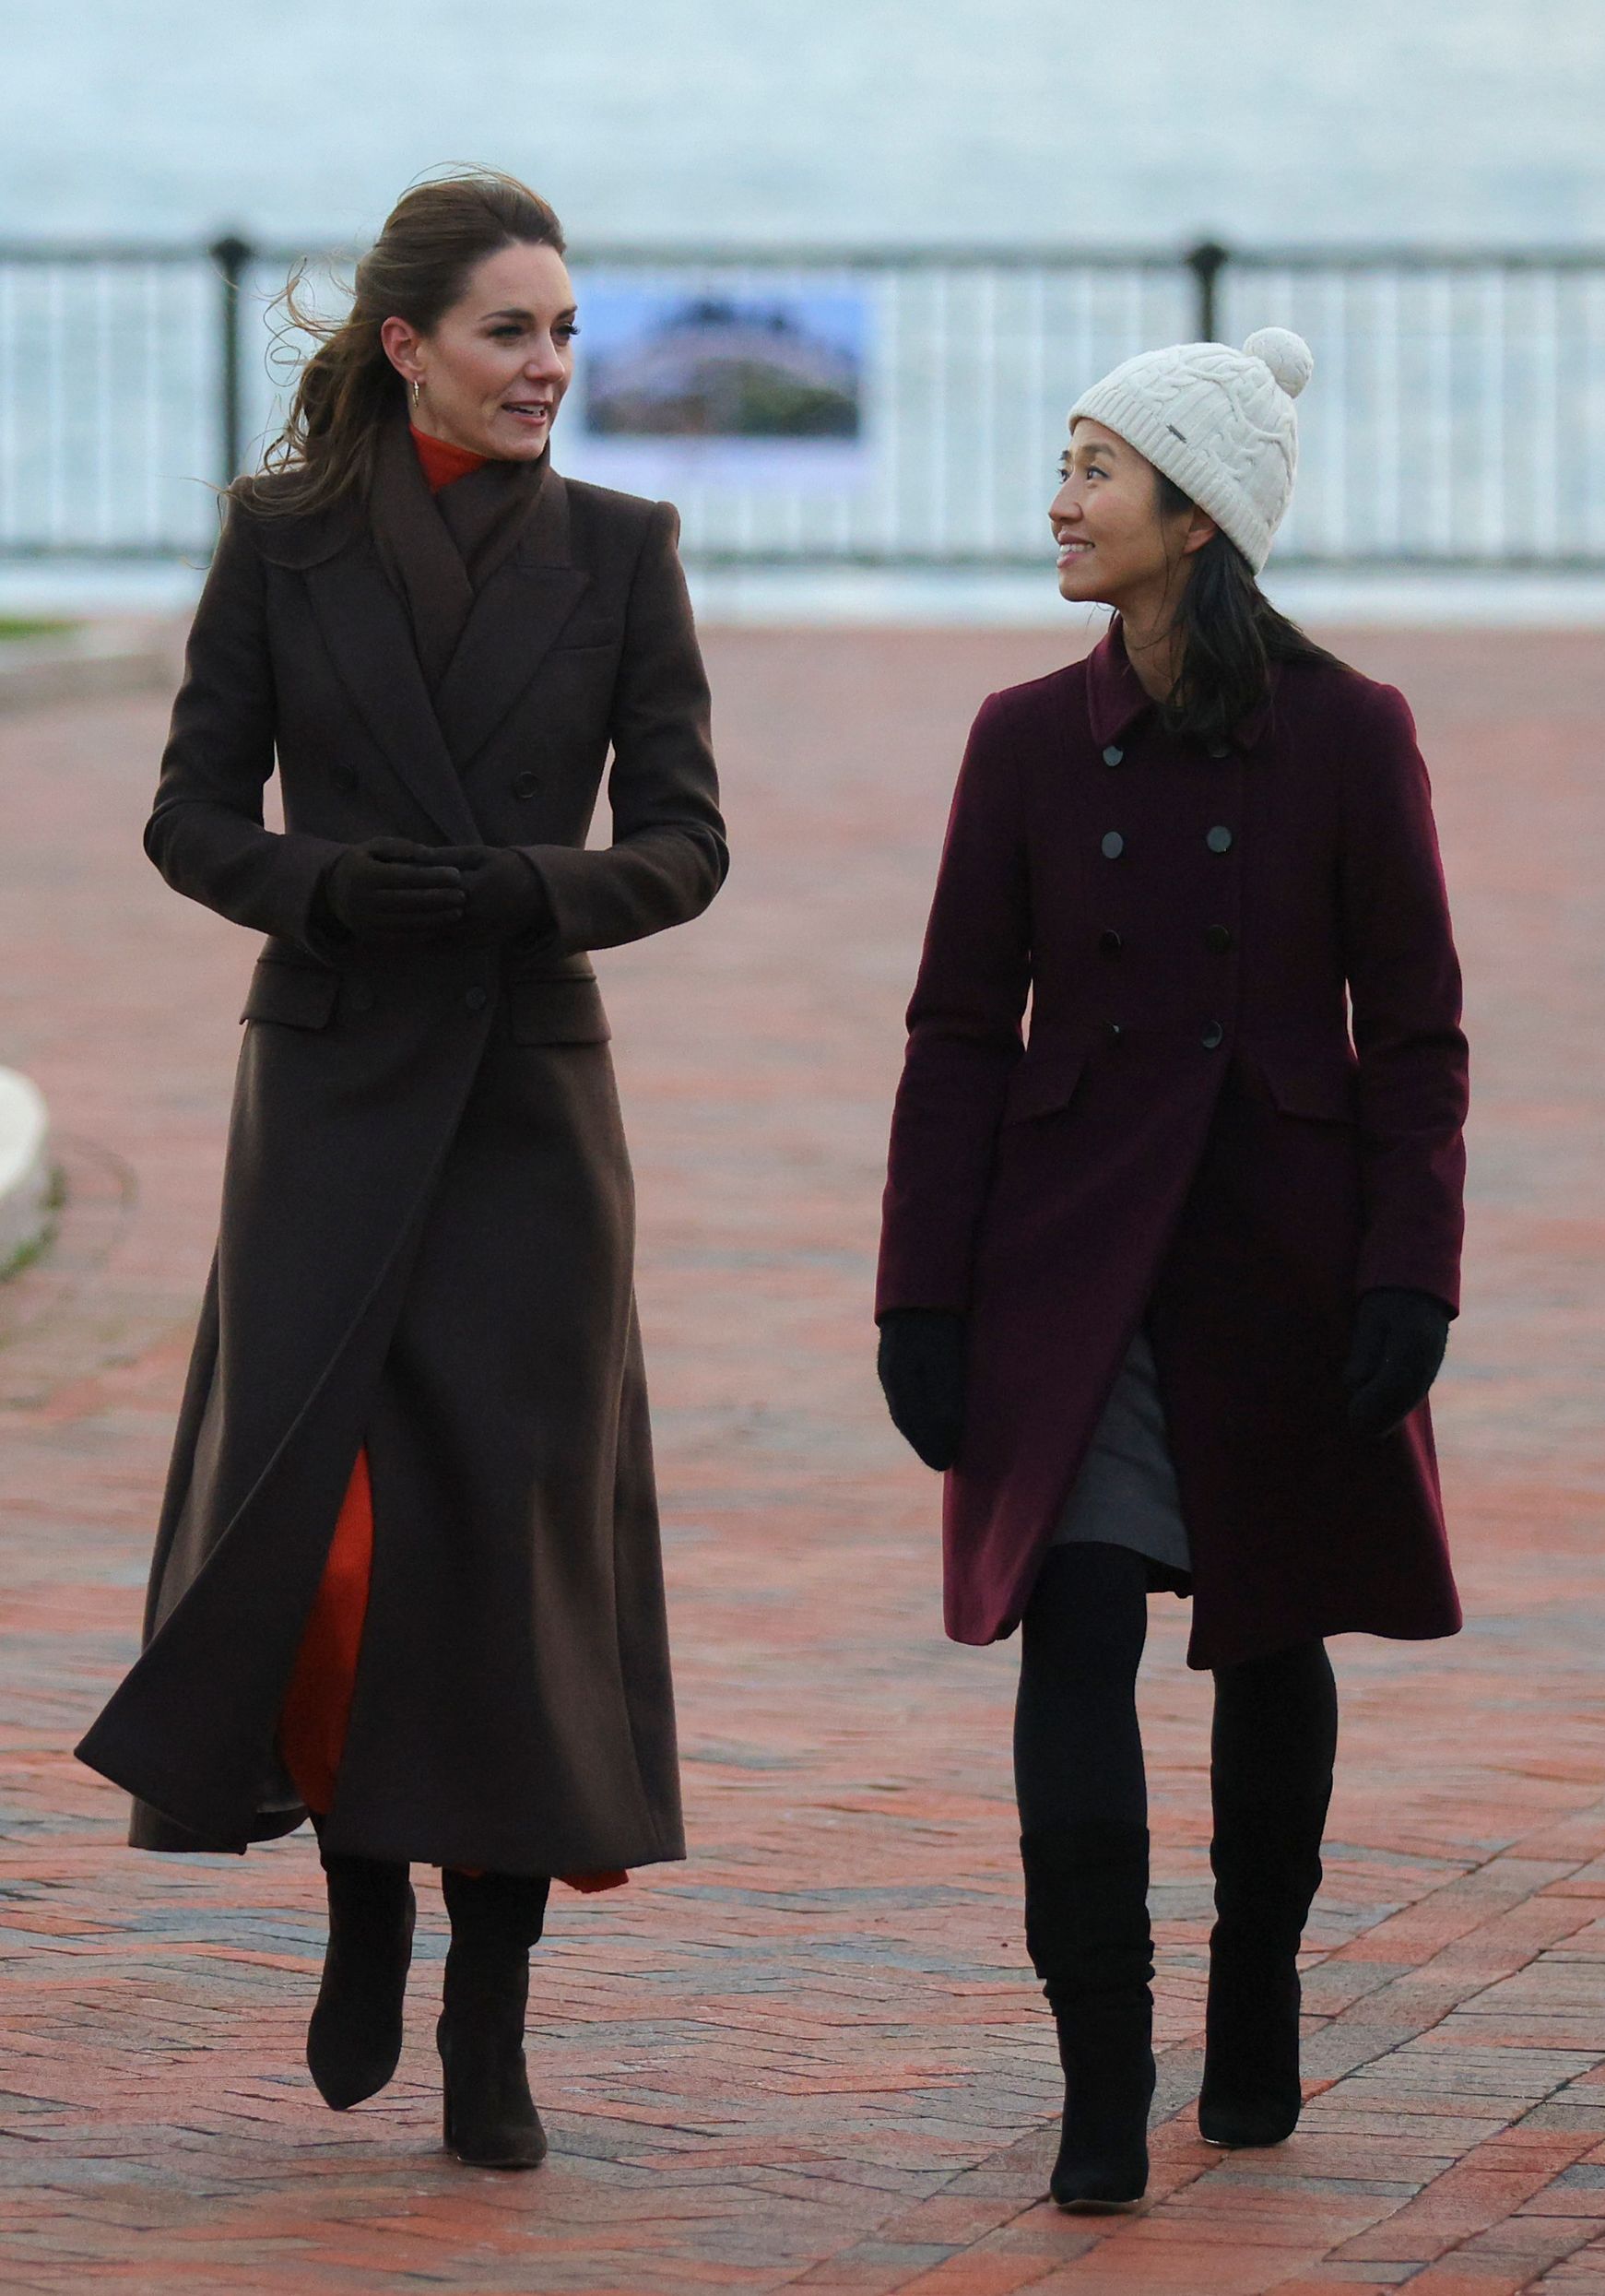 Kate Middleton's Tartan Burberry Dress & McQueen Coat In Boston